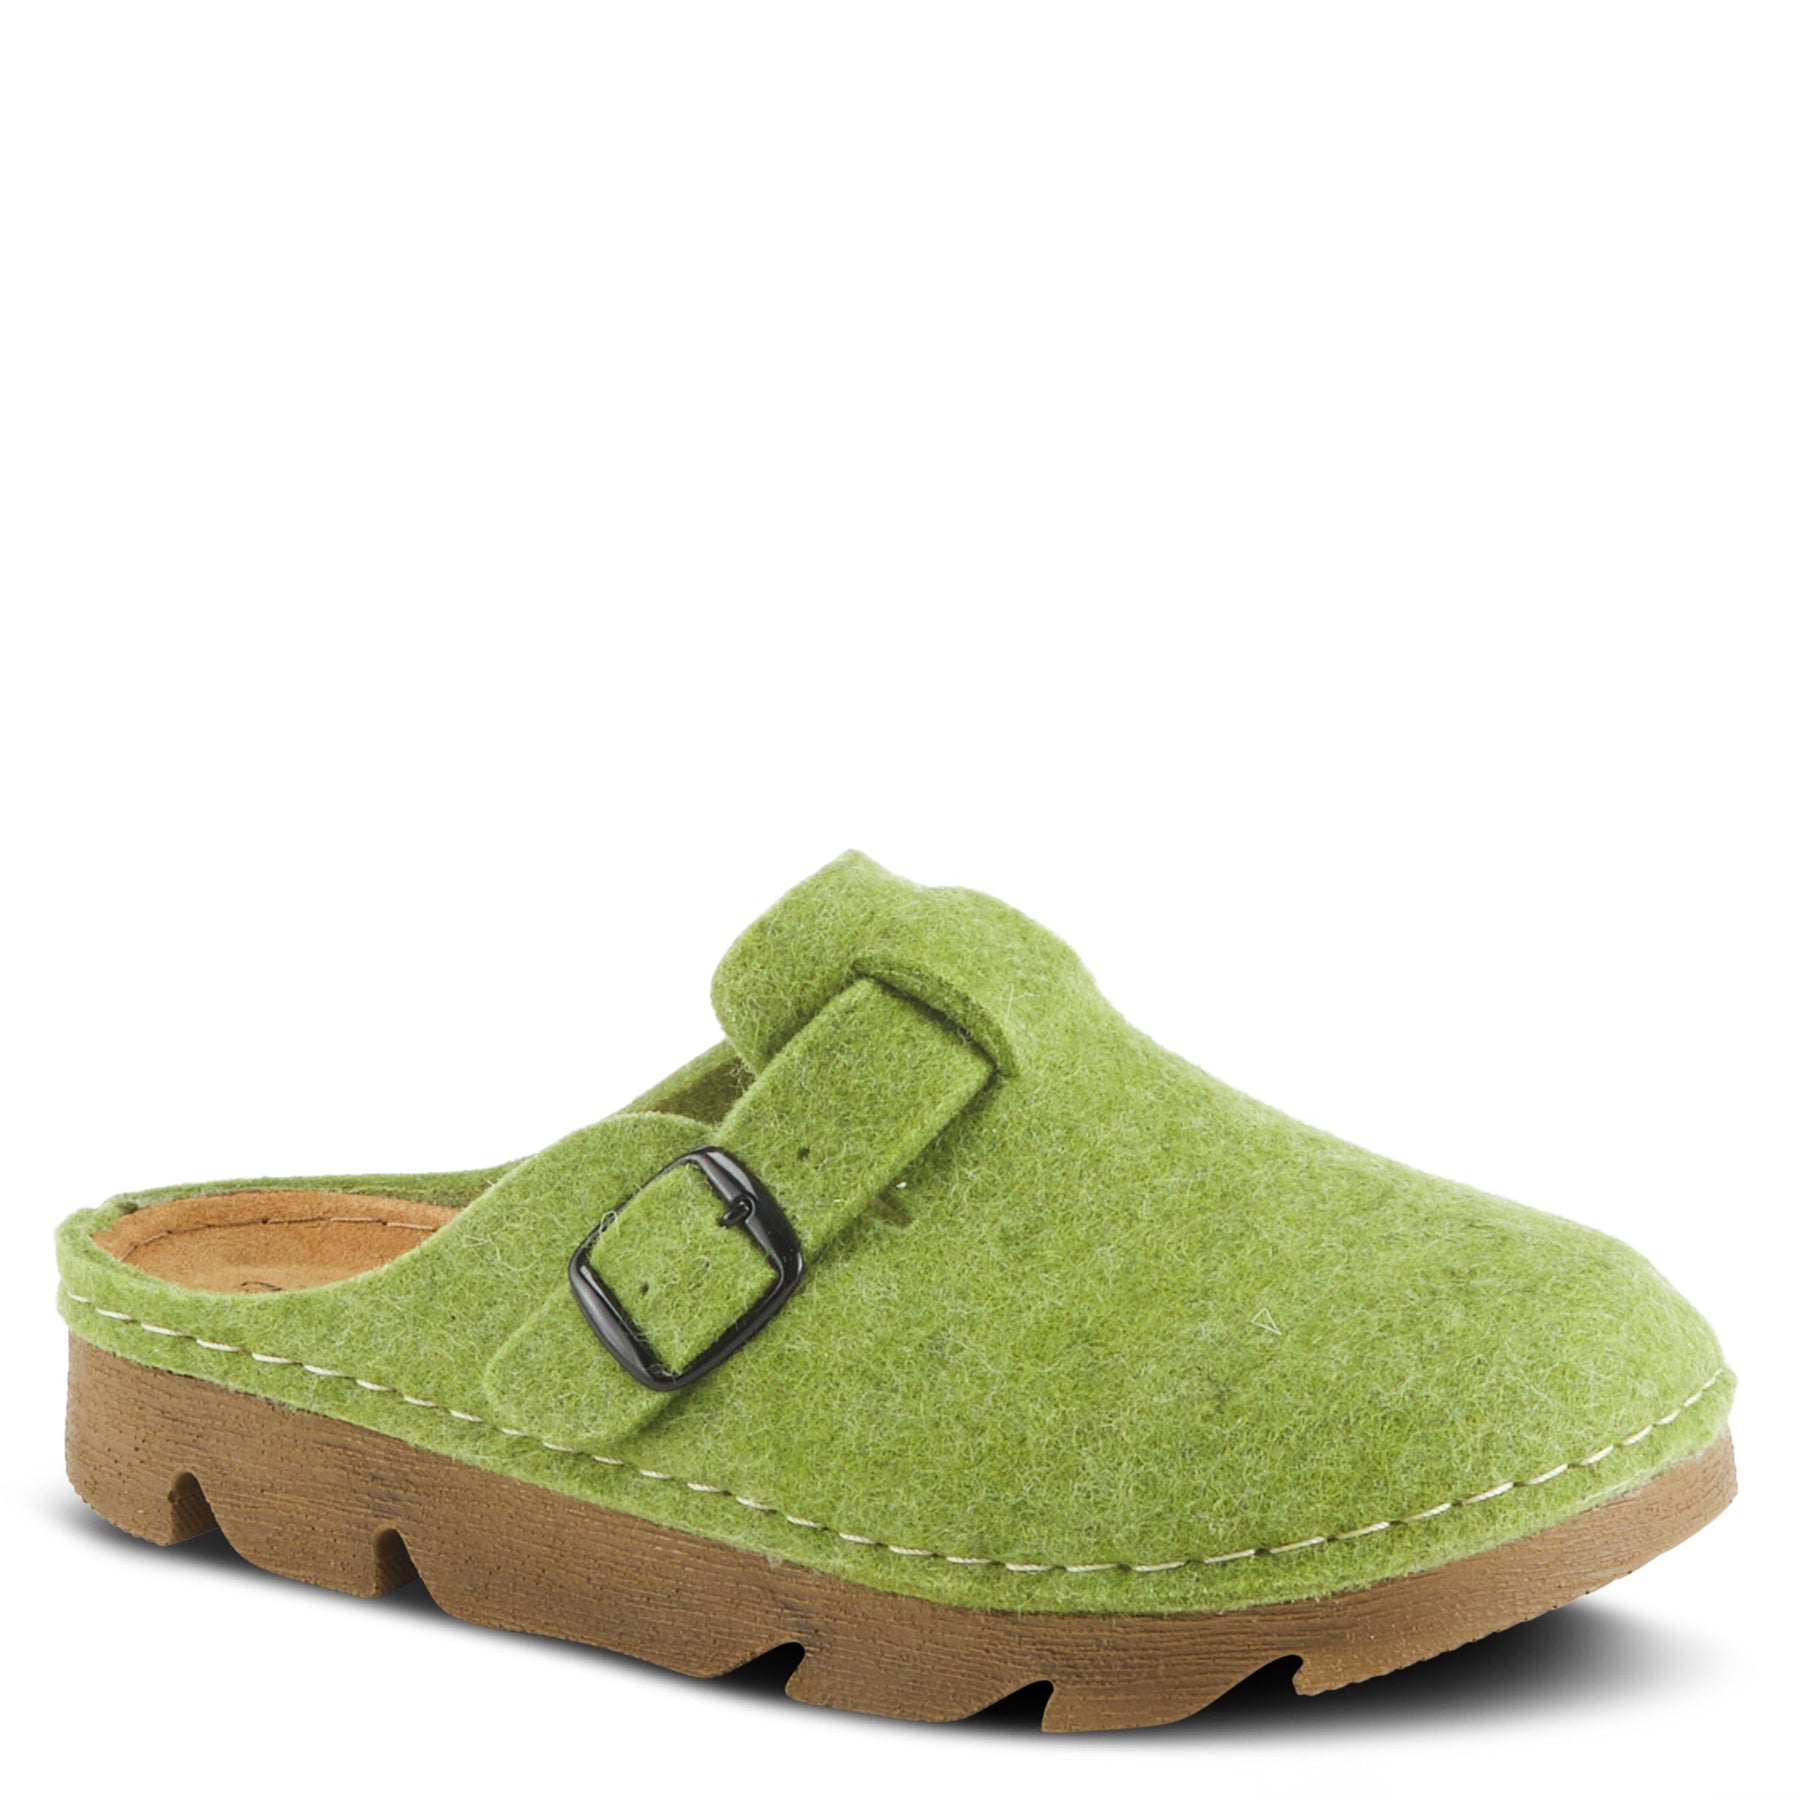 Flexus Clogger Platform Clog: Comfortable Shoes - Spring Step Shoe ...